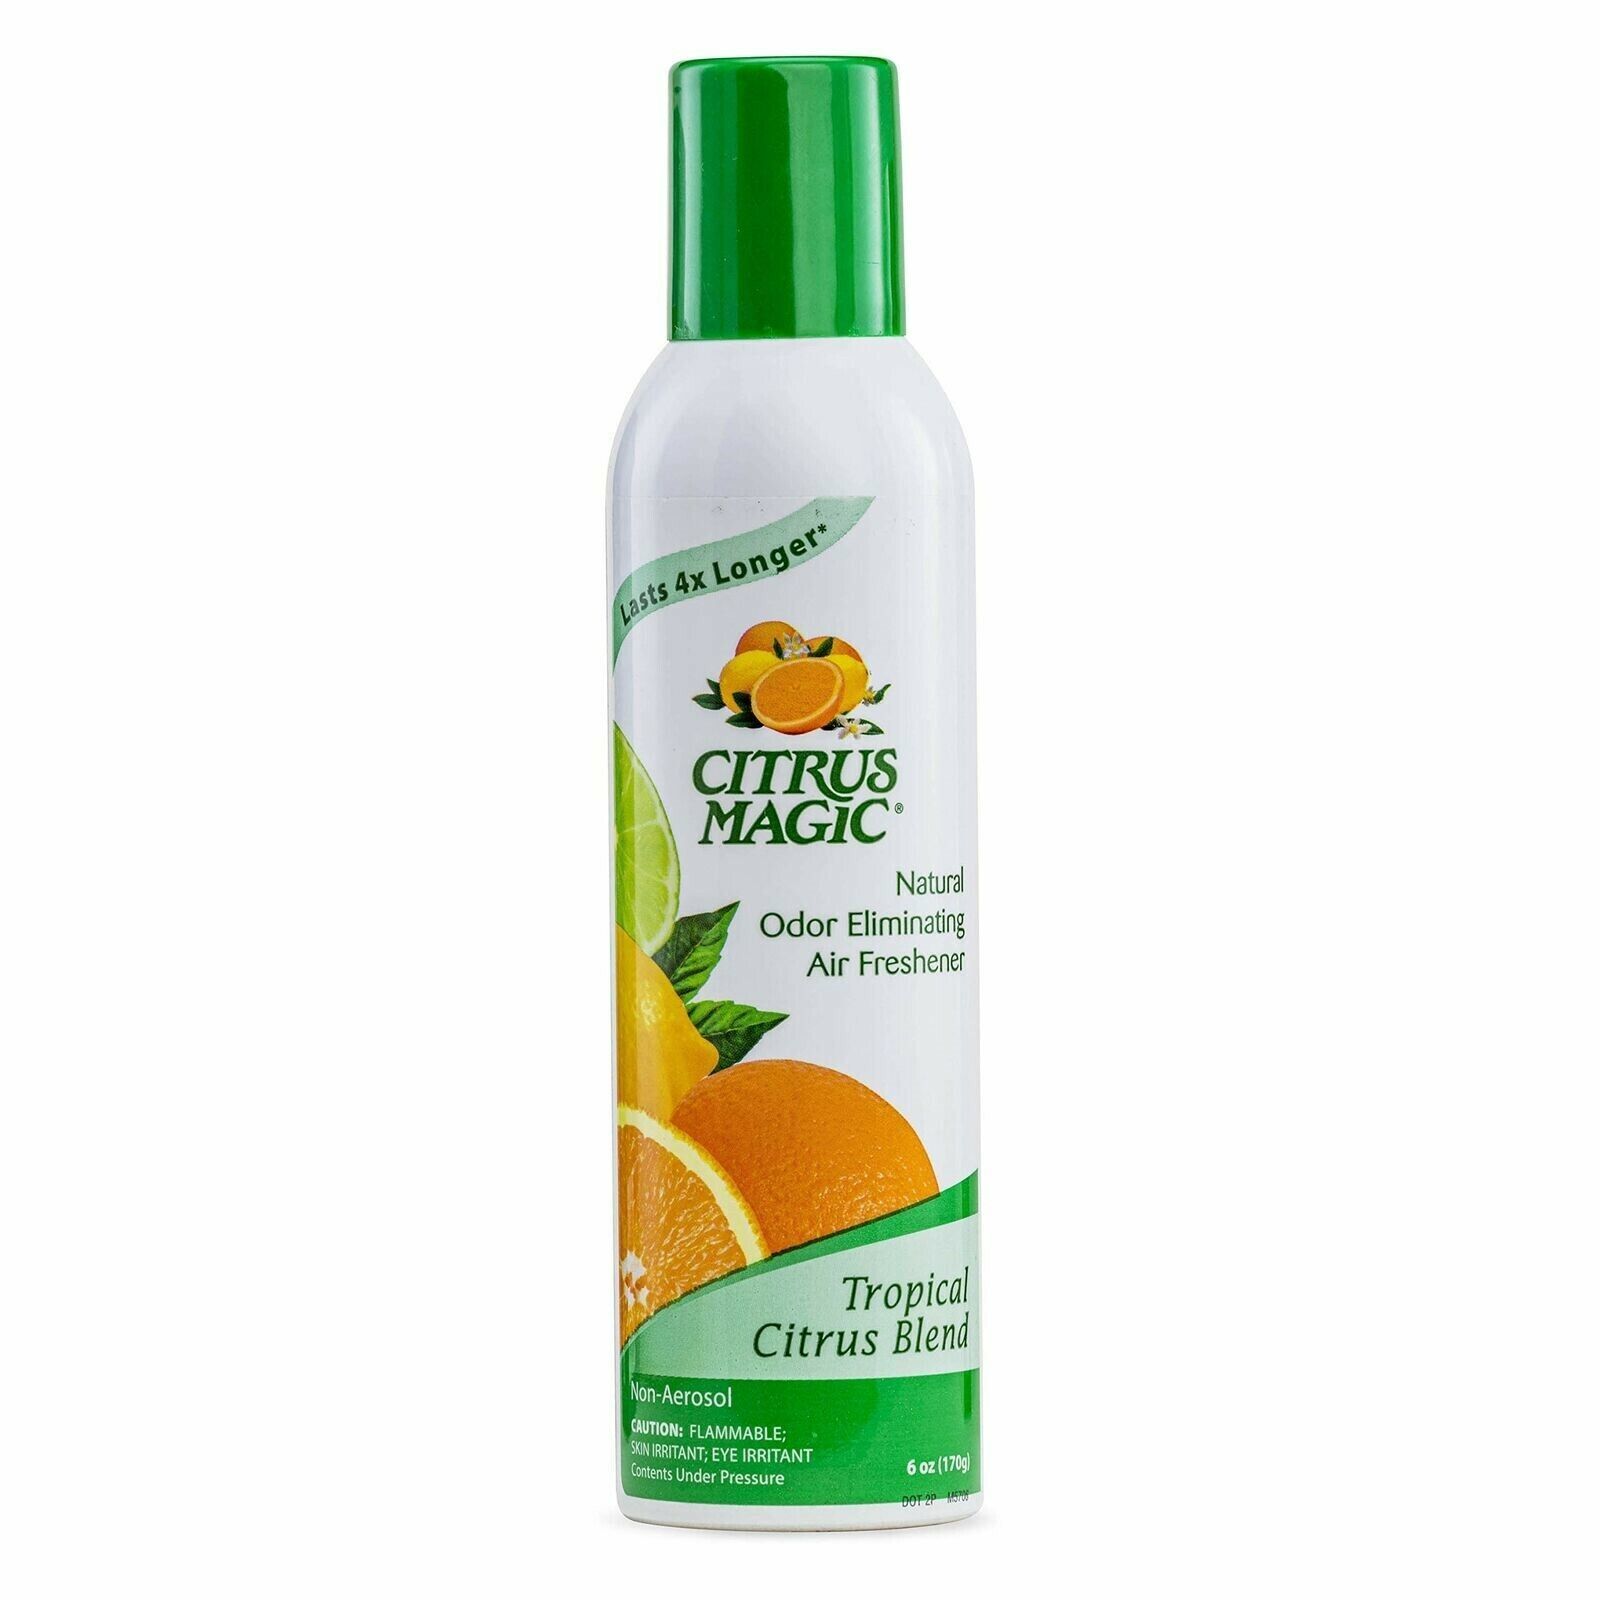 Citrus Magic Natural Odor Eliminating Air Freshener Spray Tropical Citrus Ble... - $21.55